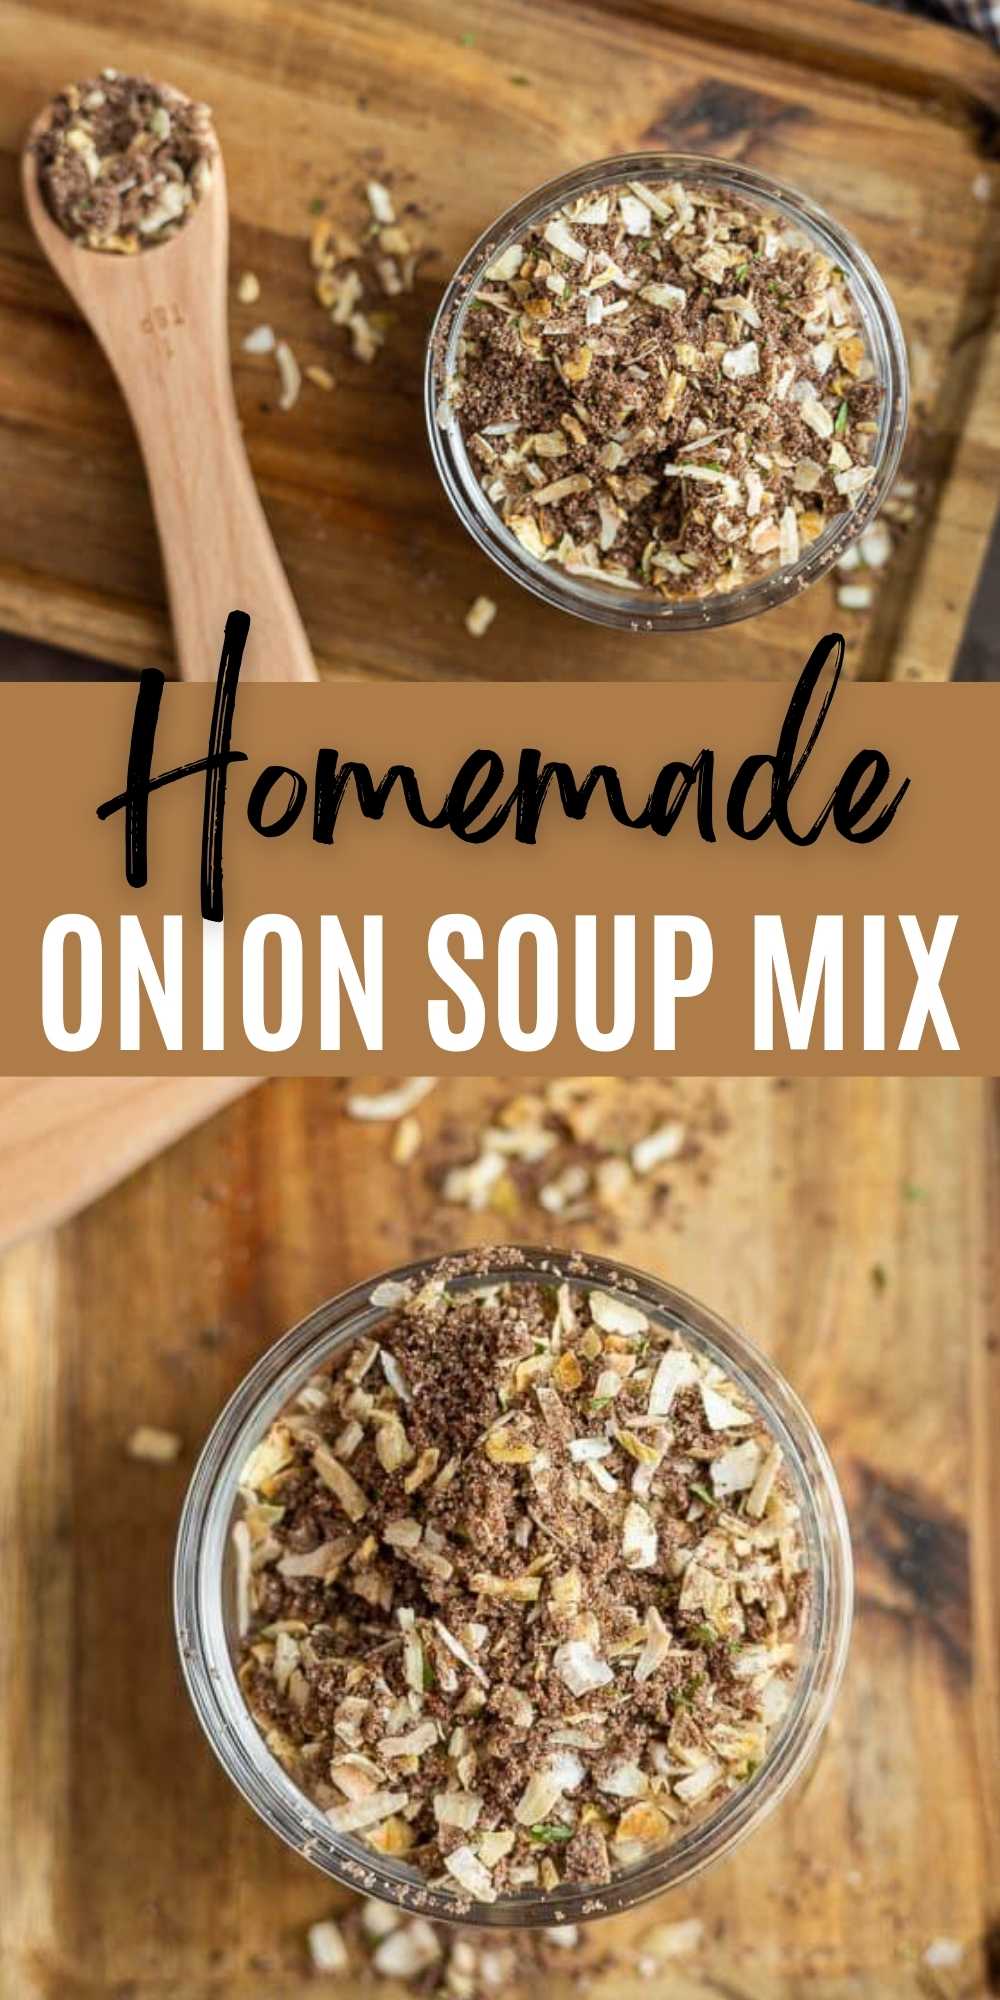 https://www.eatingonadime.com/wp-content/uploads/2022/08/Homemade-Onion-Soup-Mix-3.jpg